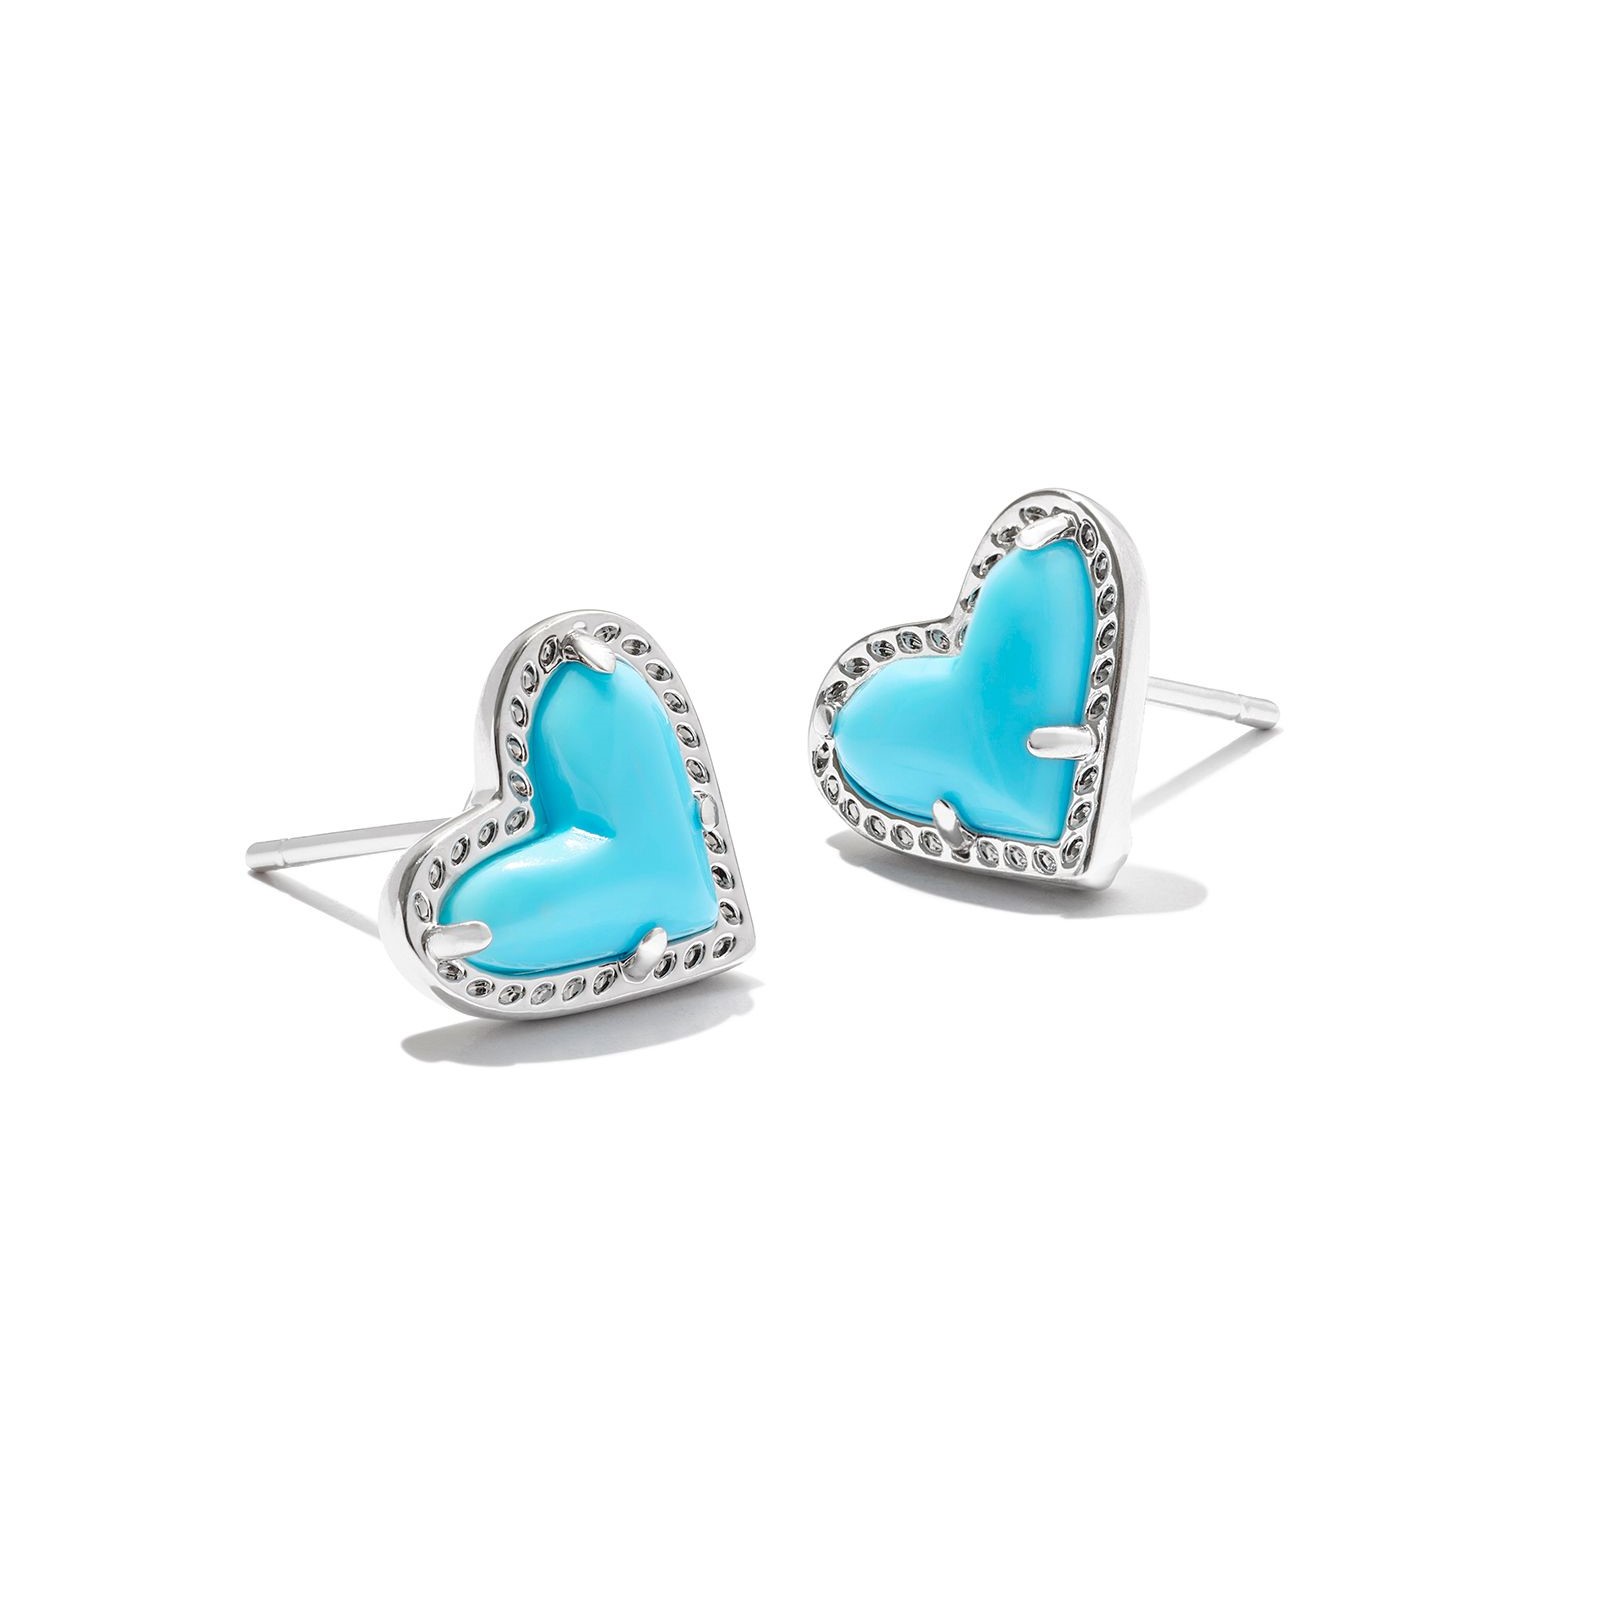 Kendra Scott Ari Heart Stud Earrings in Silver Turquoise Magesite